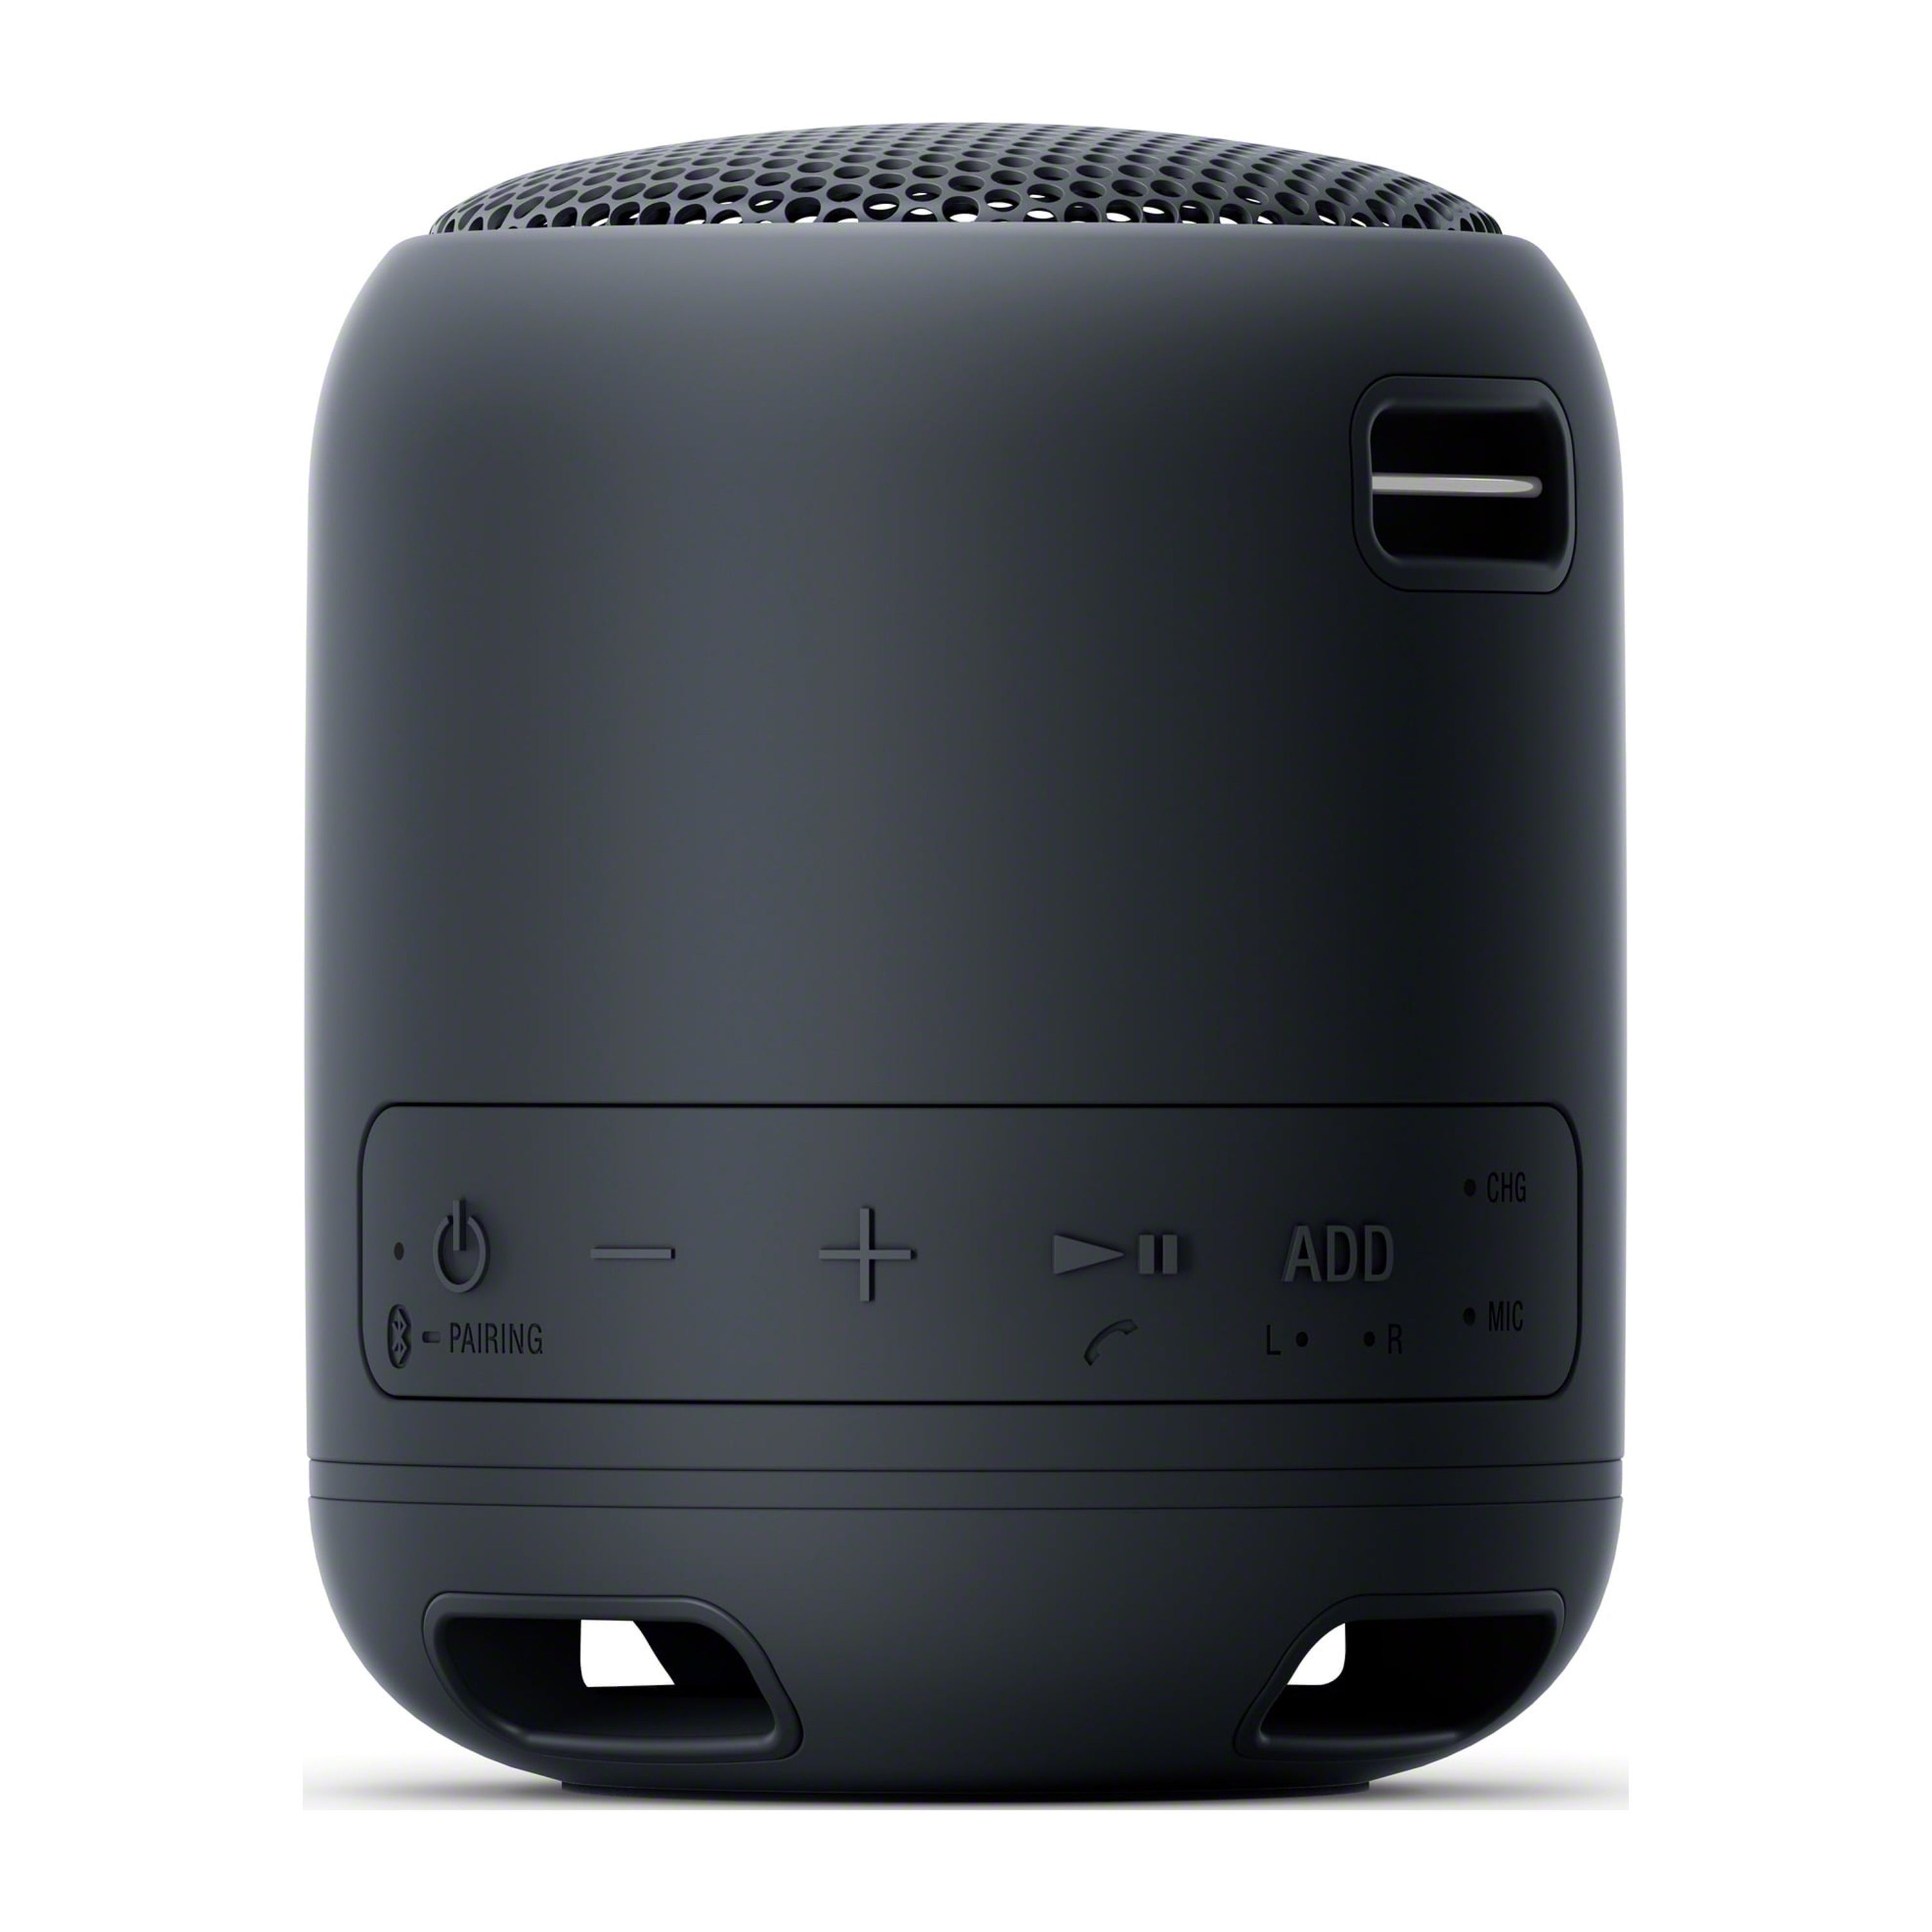 Sony Portable Bluetooth Speaker, Black, SRSXB12/BMC4 - image 3 of 7